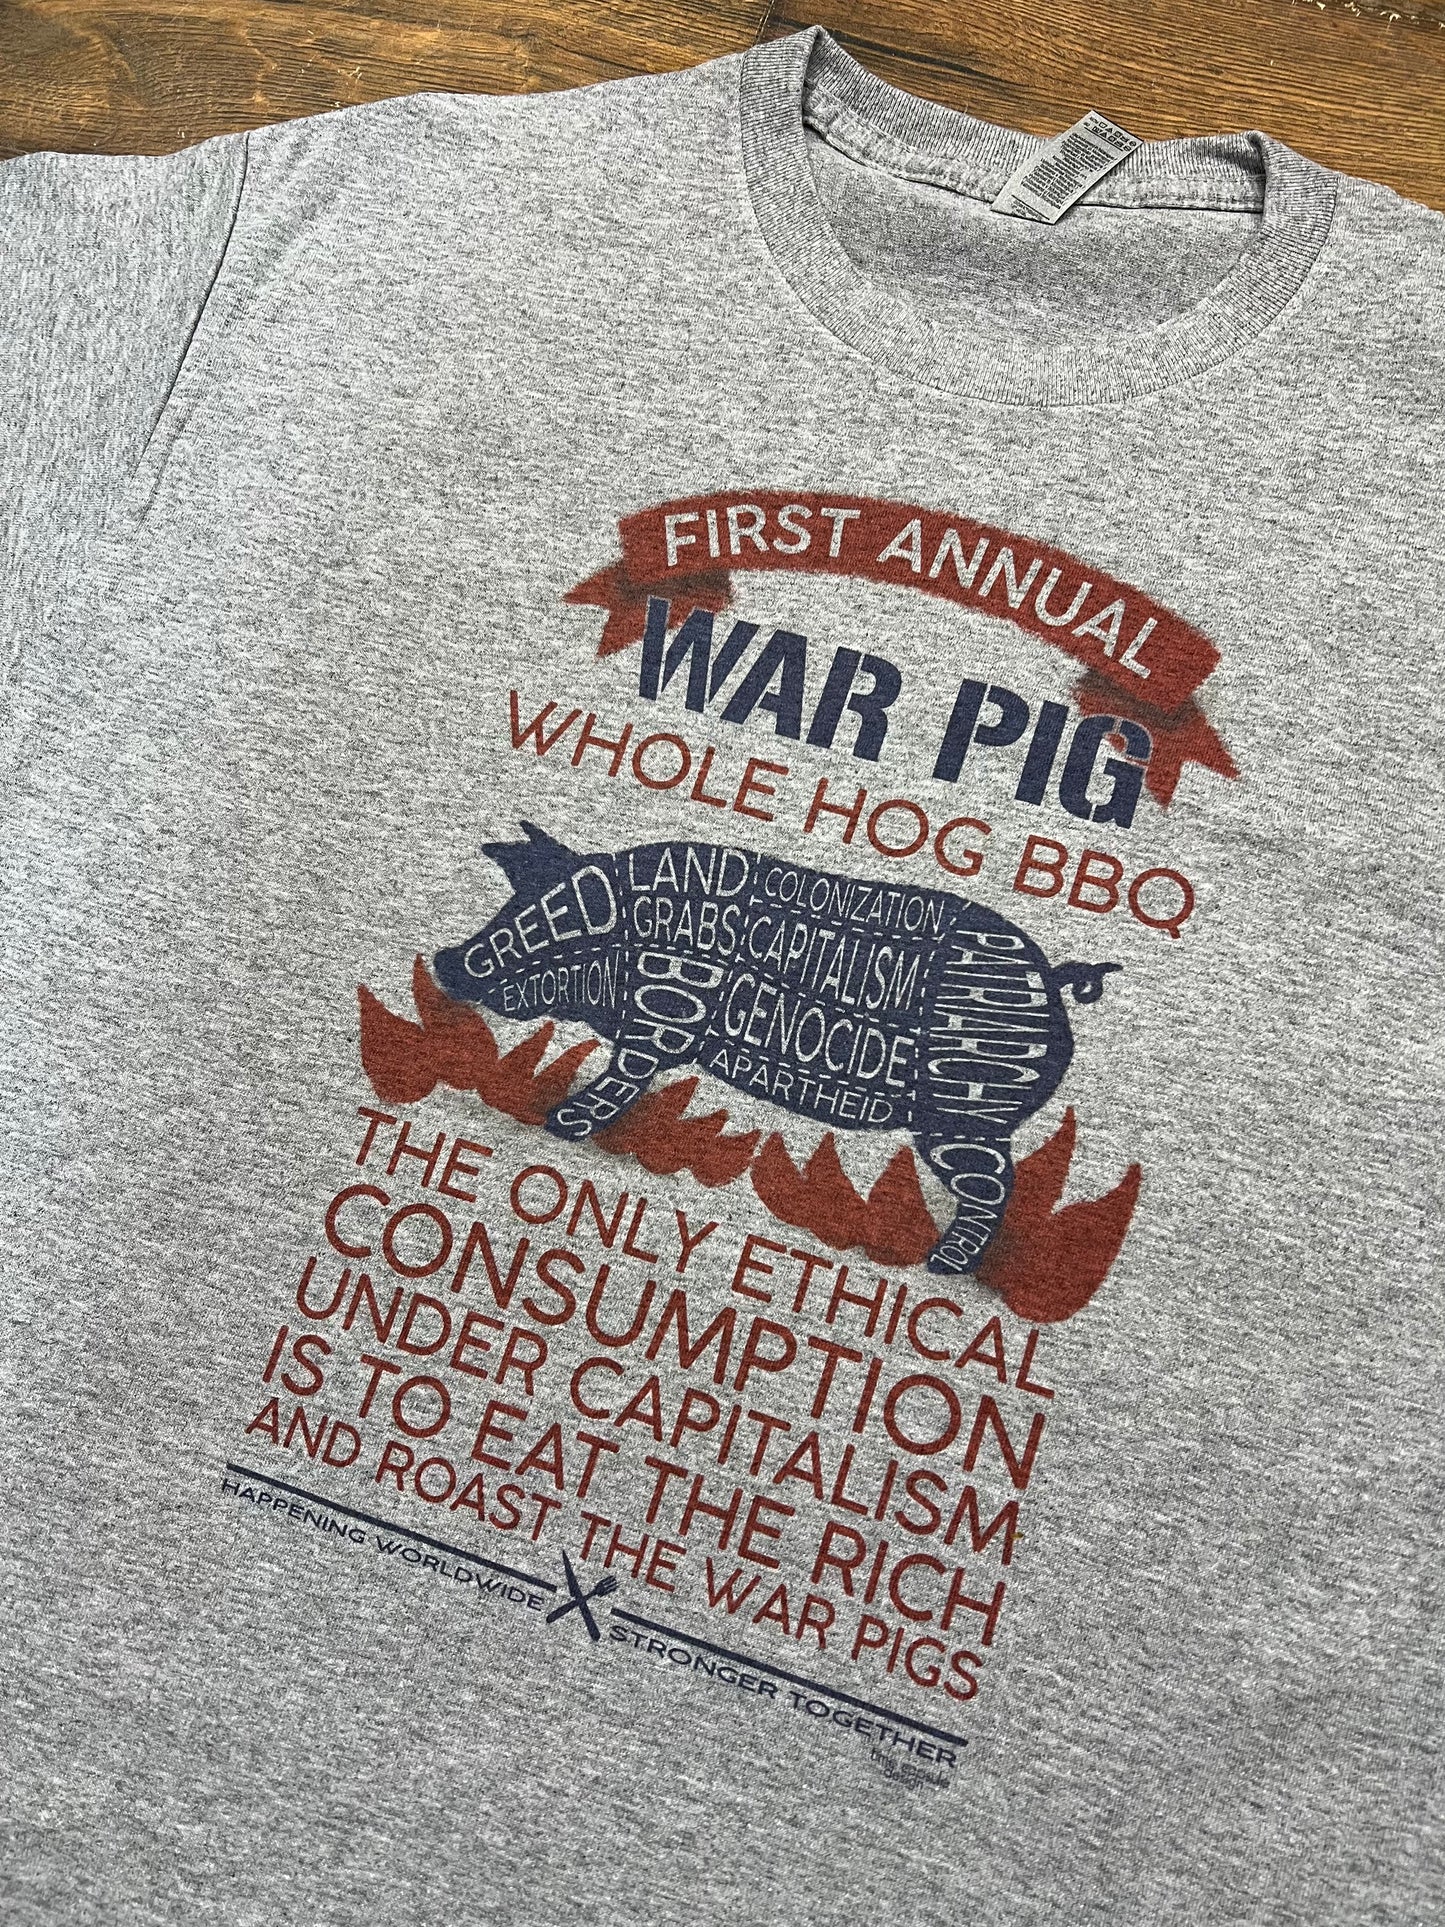 Whole Hog War Pig Roast Shirt